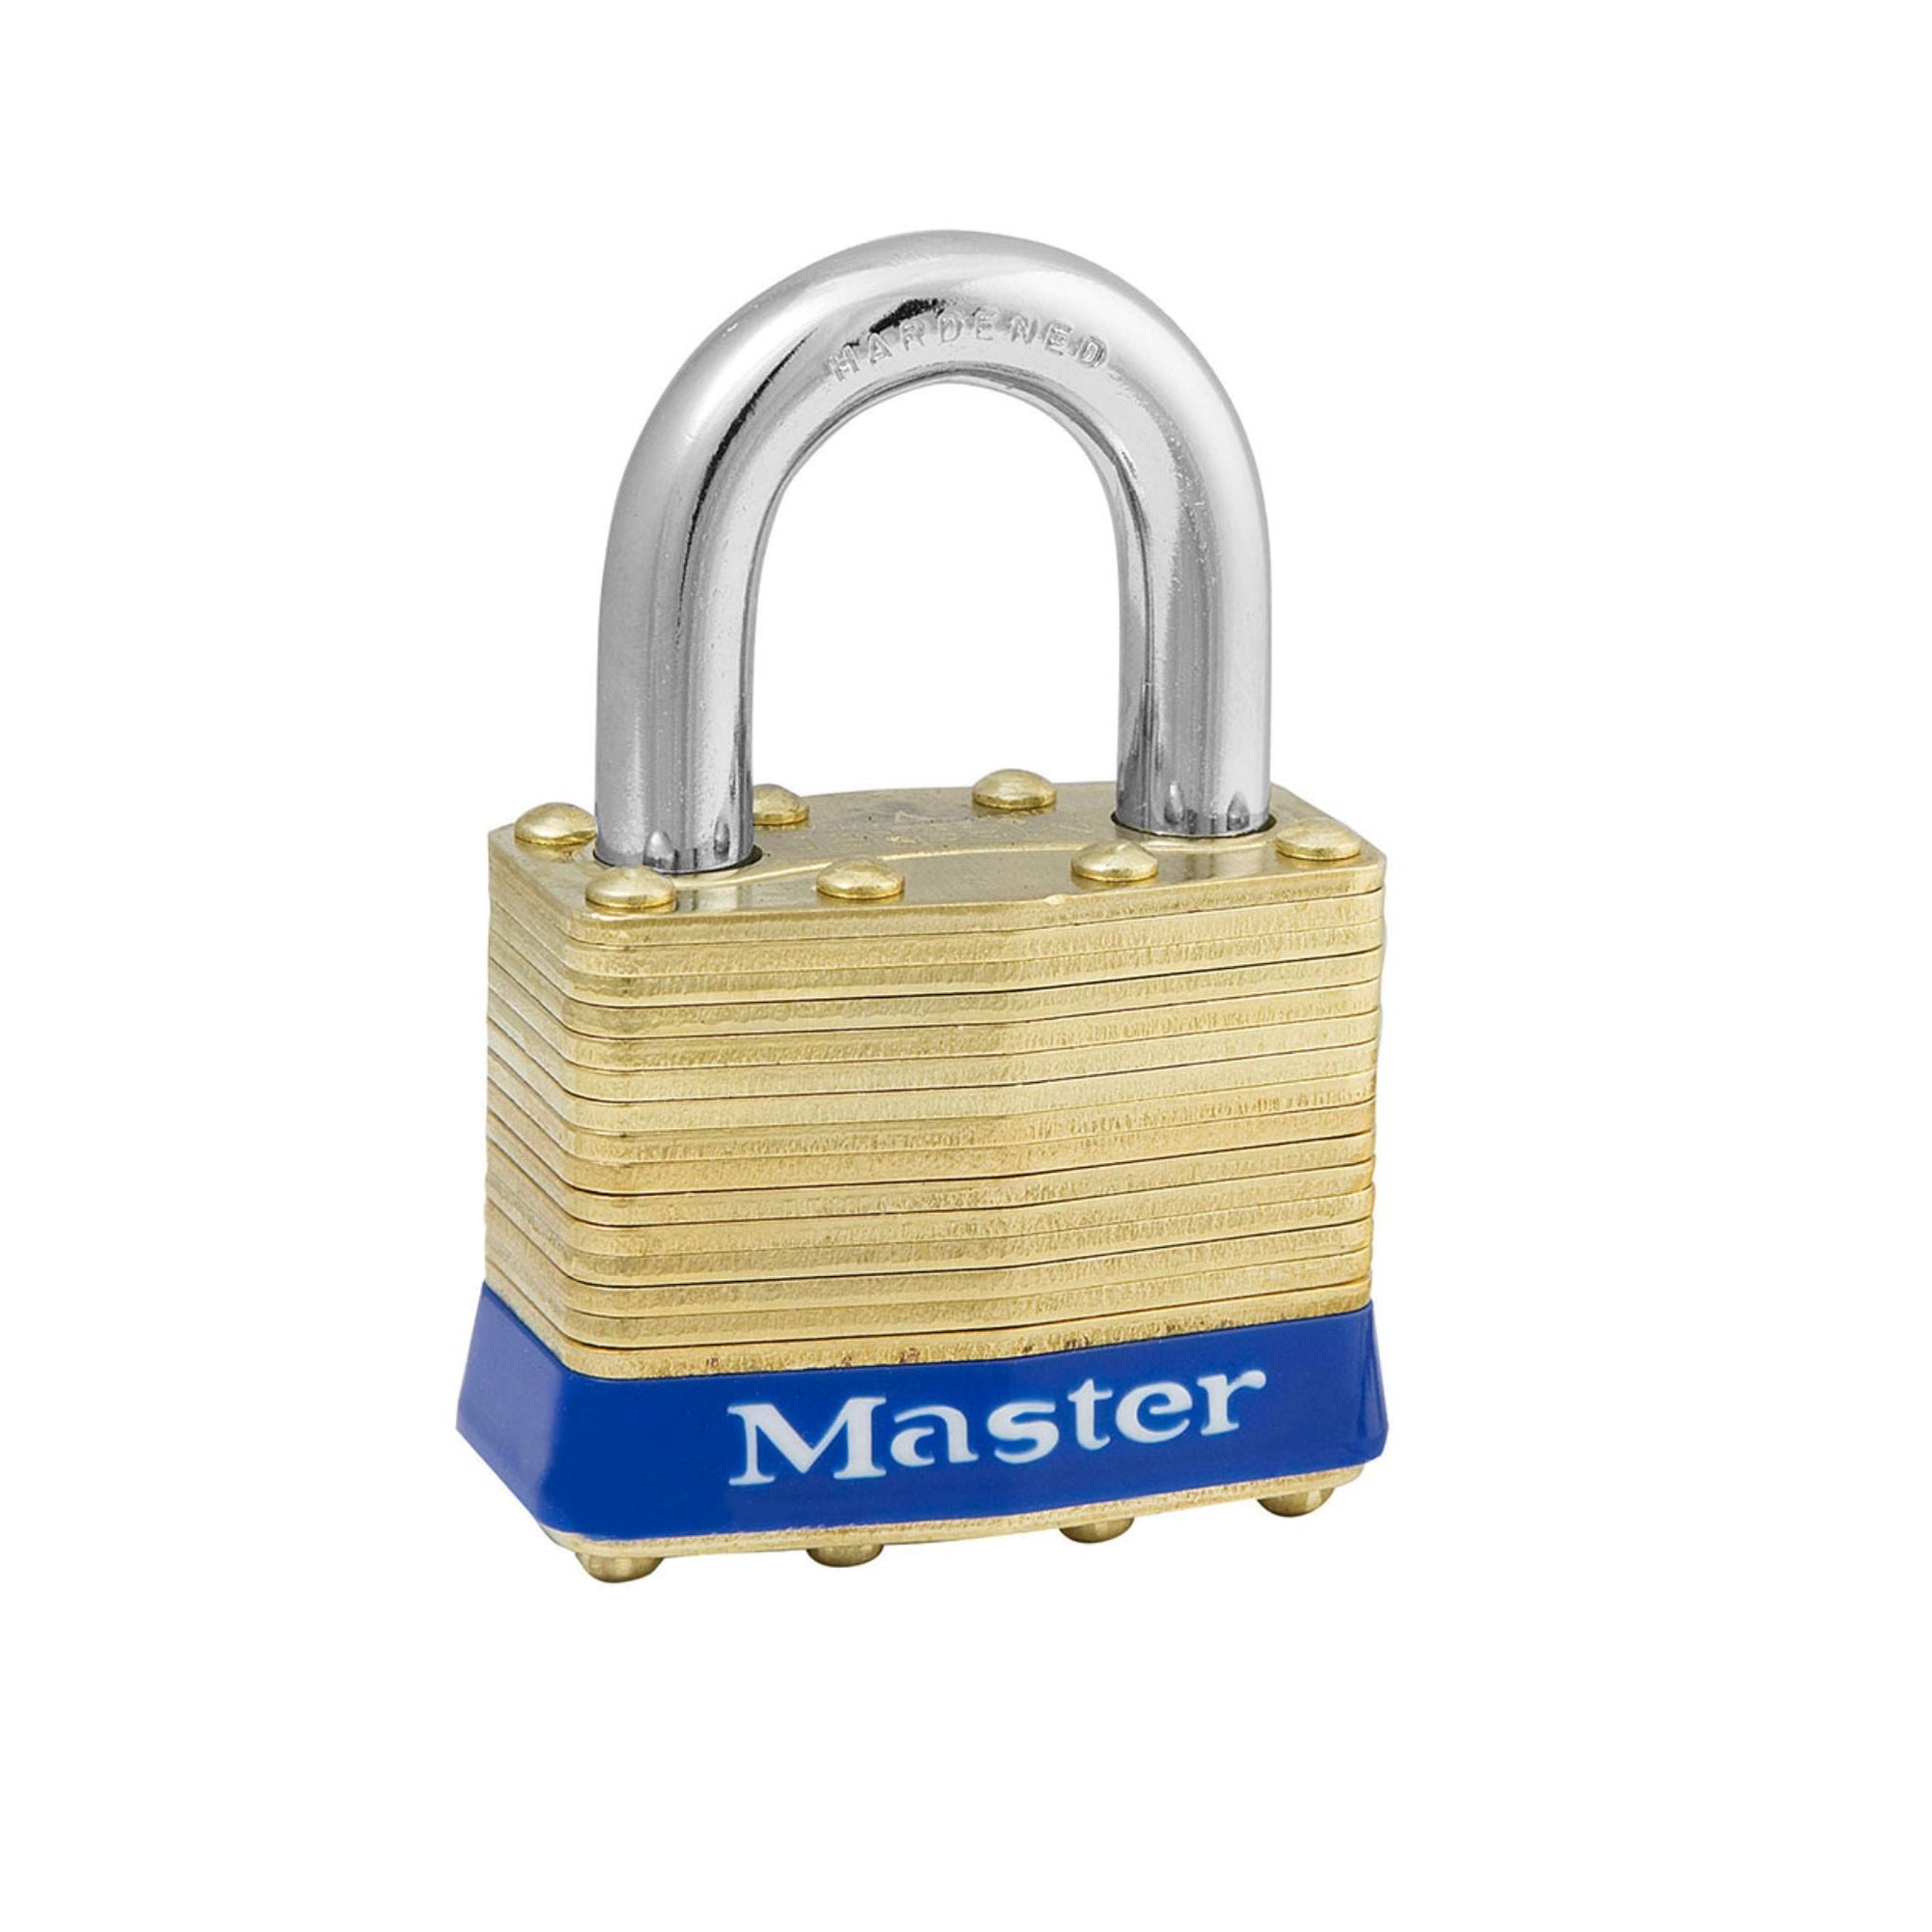 Master Lock 2KA 0316 Lock Laminated brass No. 2 Series Padlock Keyed to Match Existing Key Number KA0316 - The Lock Source